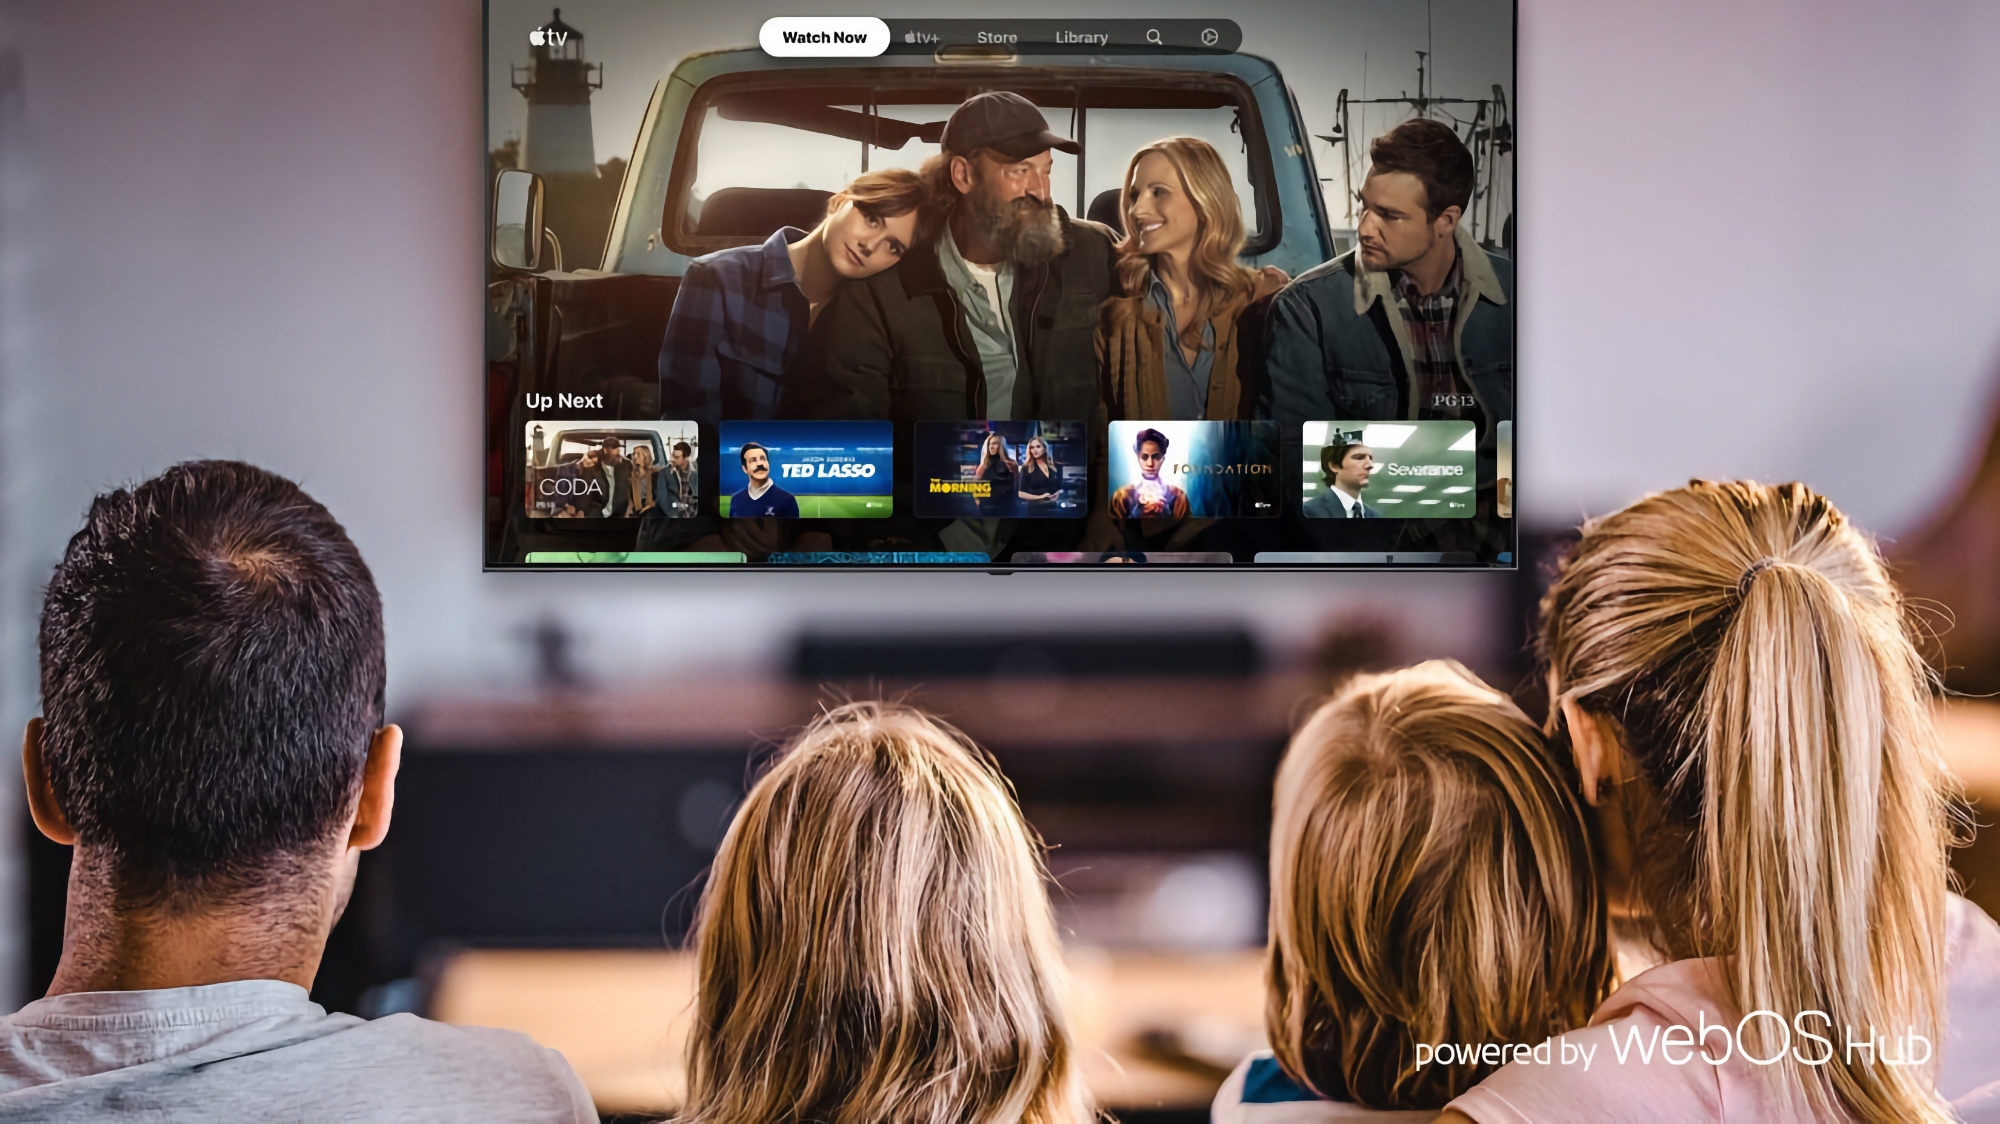 LG's webOS smart TVs feature Apple TV, Apple Music and HomeKit apps